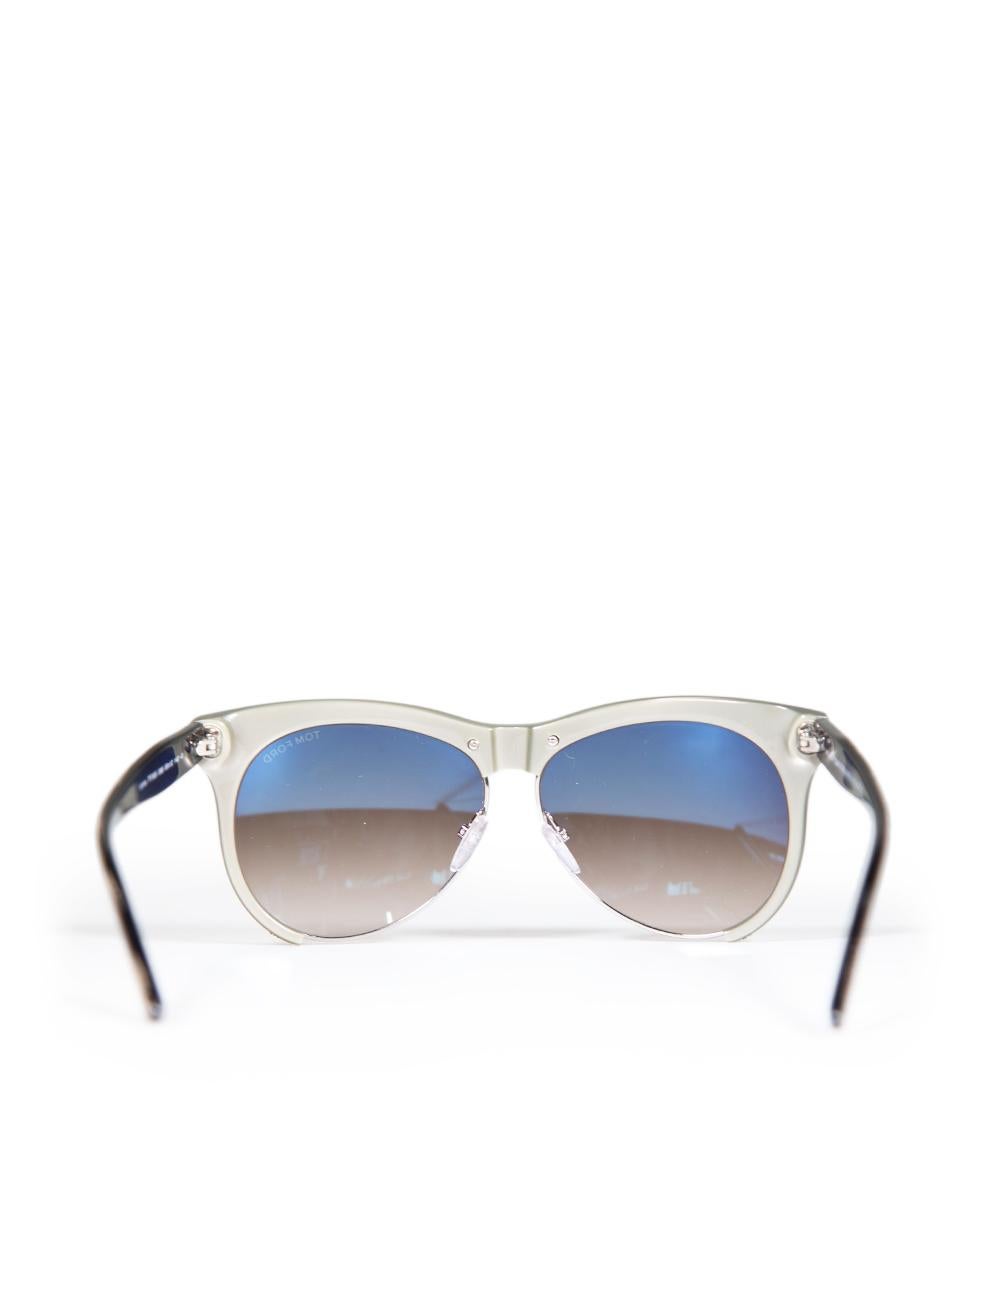 Women's Tom Ford Grey Bronze Leona Round Sunglasses For Sale